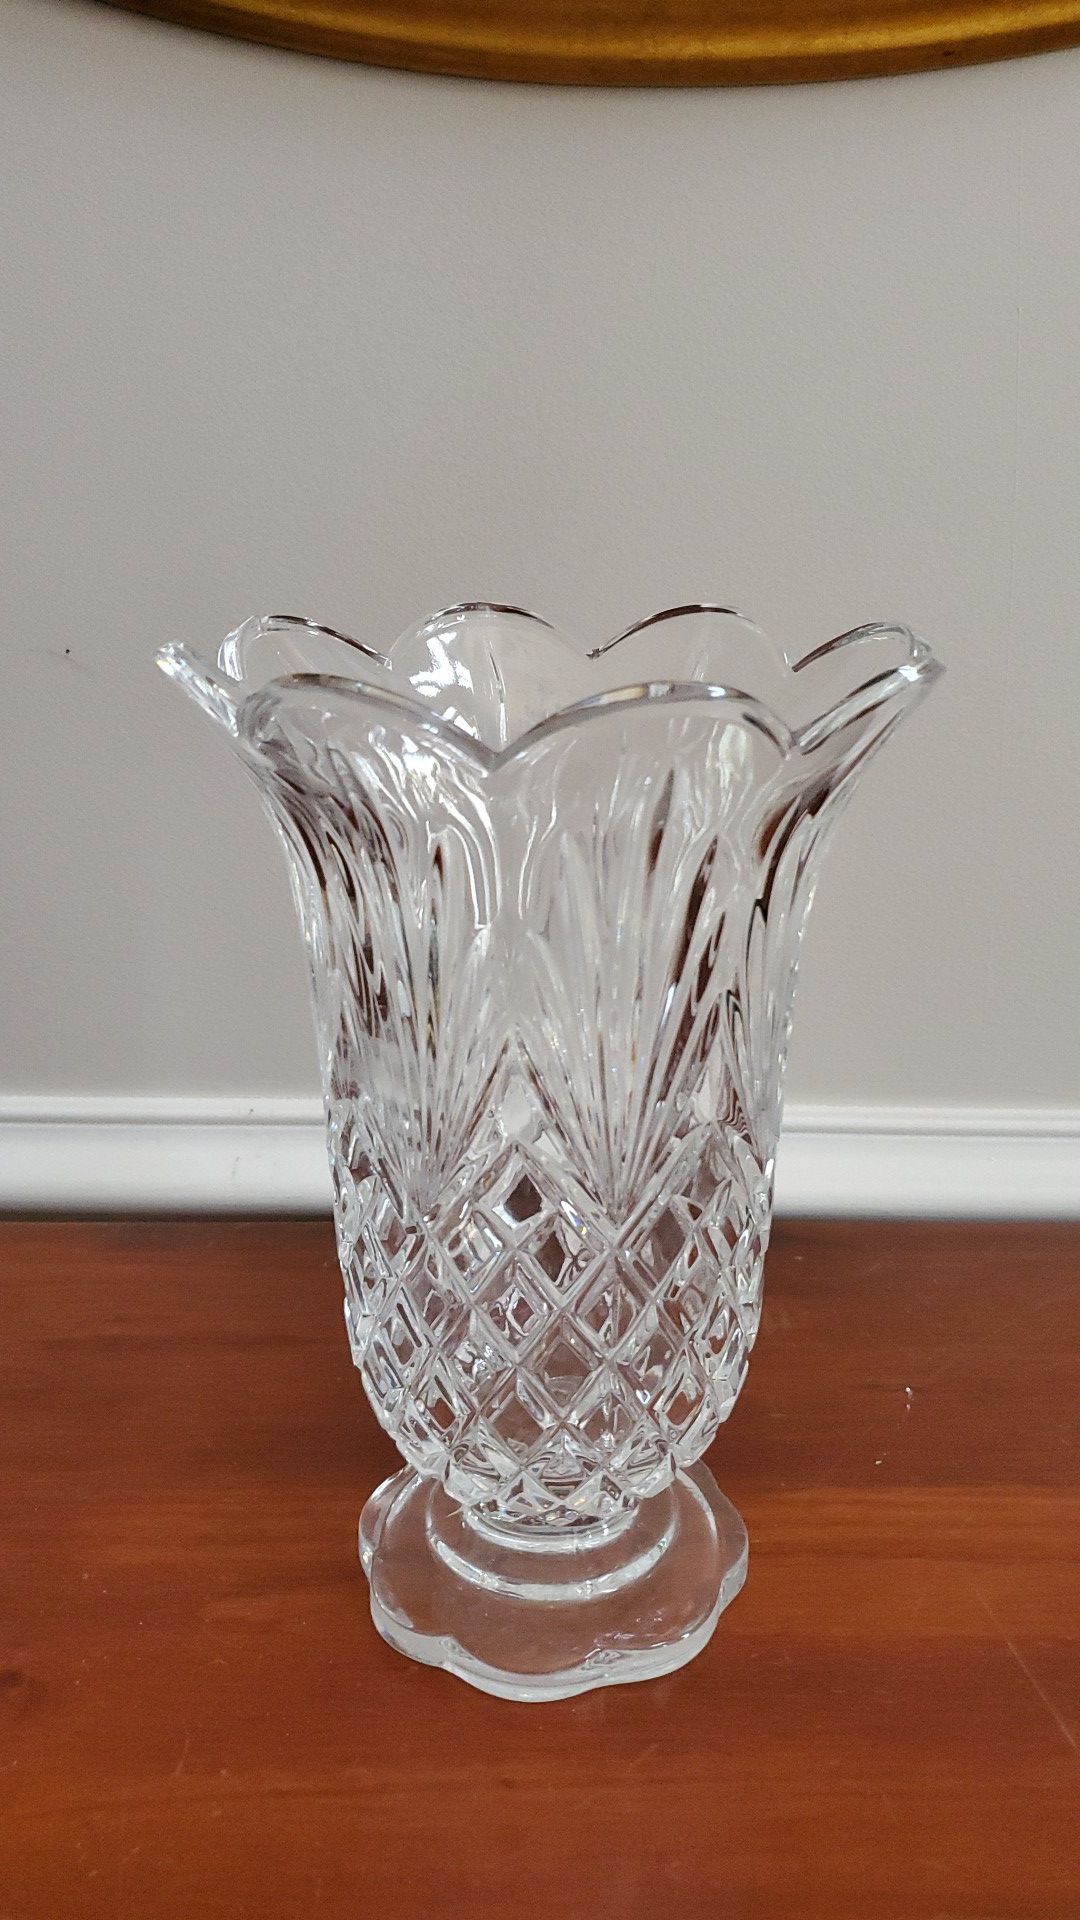 Good quality crystal vase